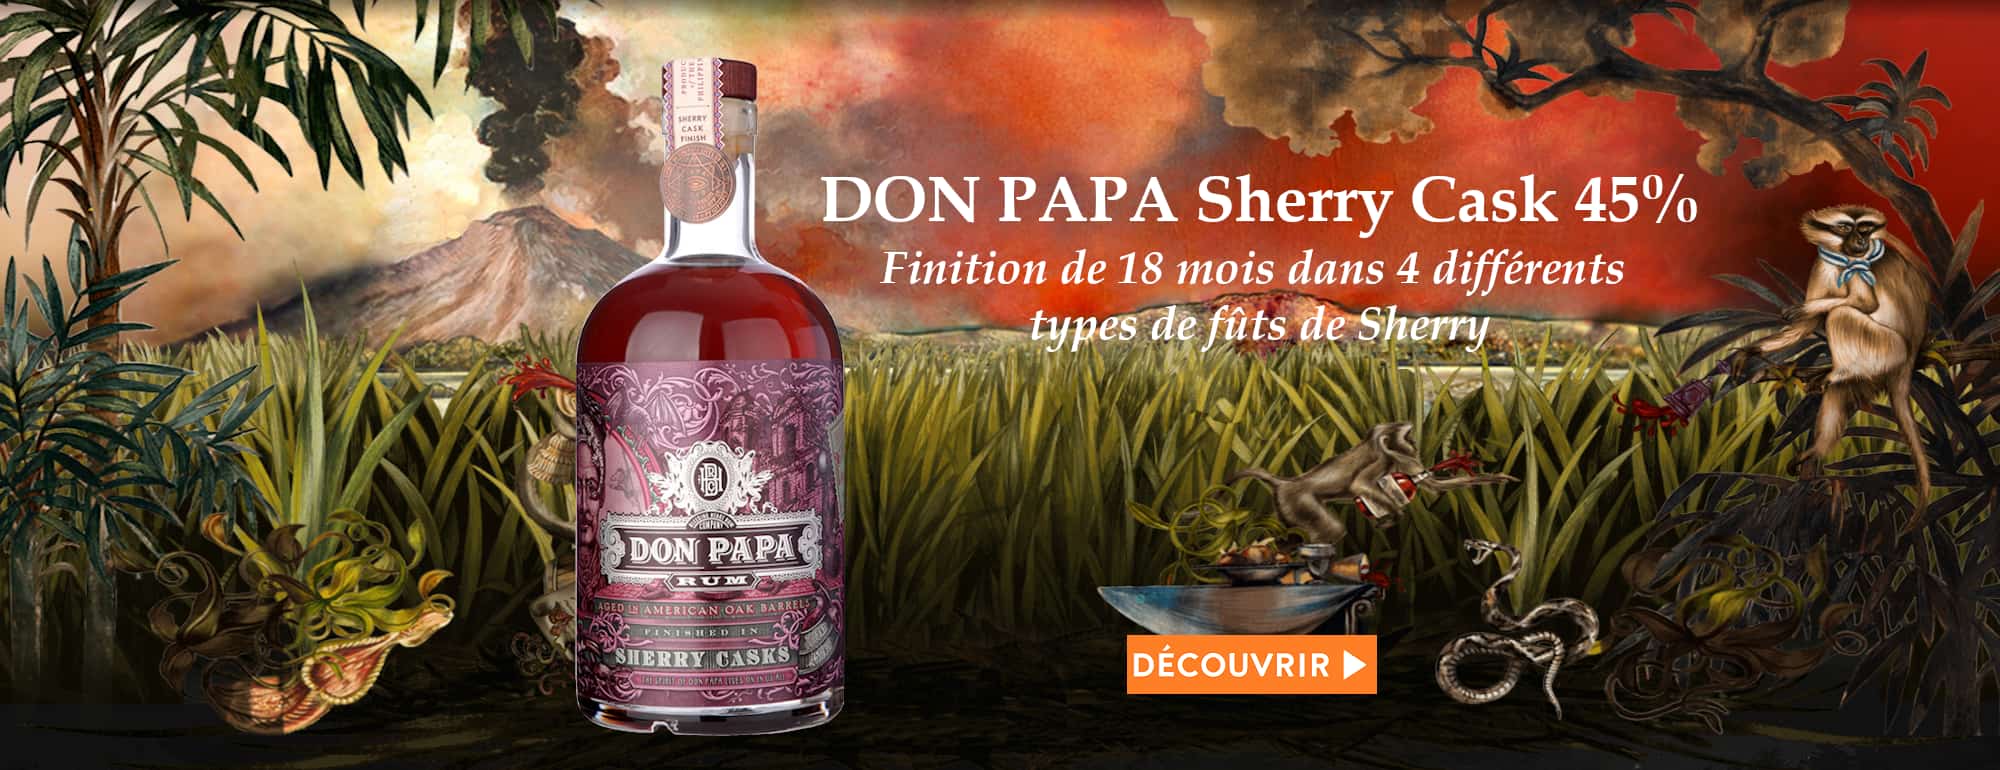 don papa sherry casks